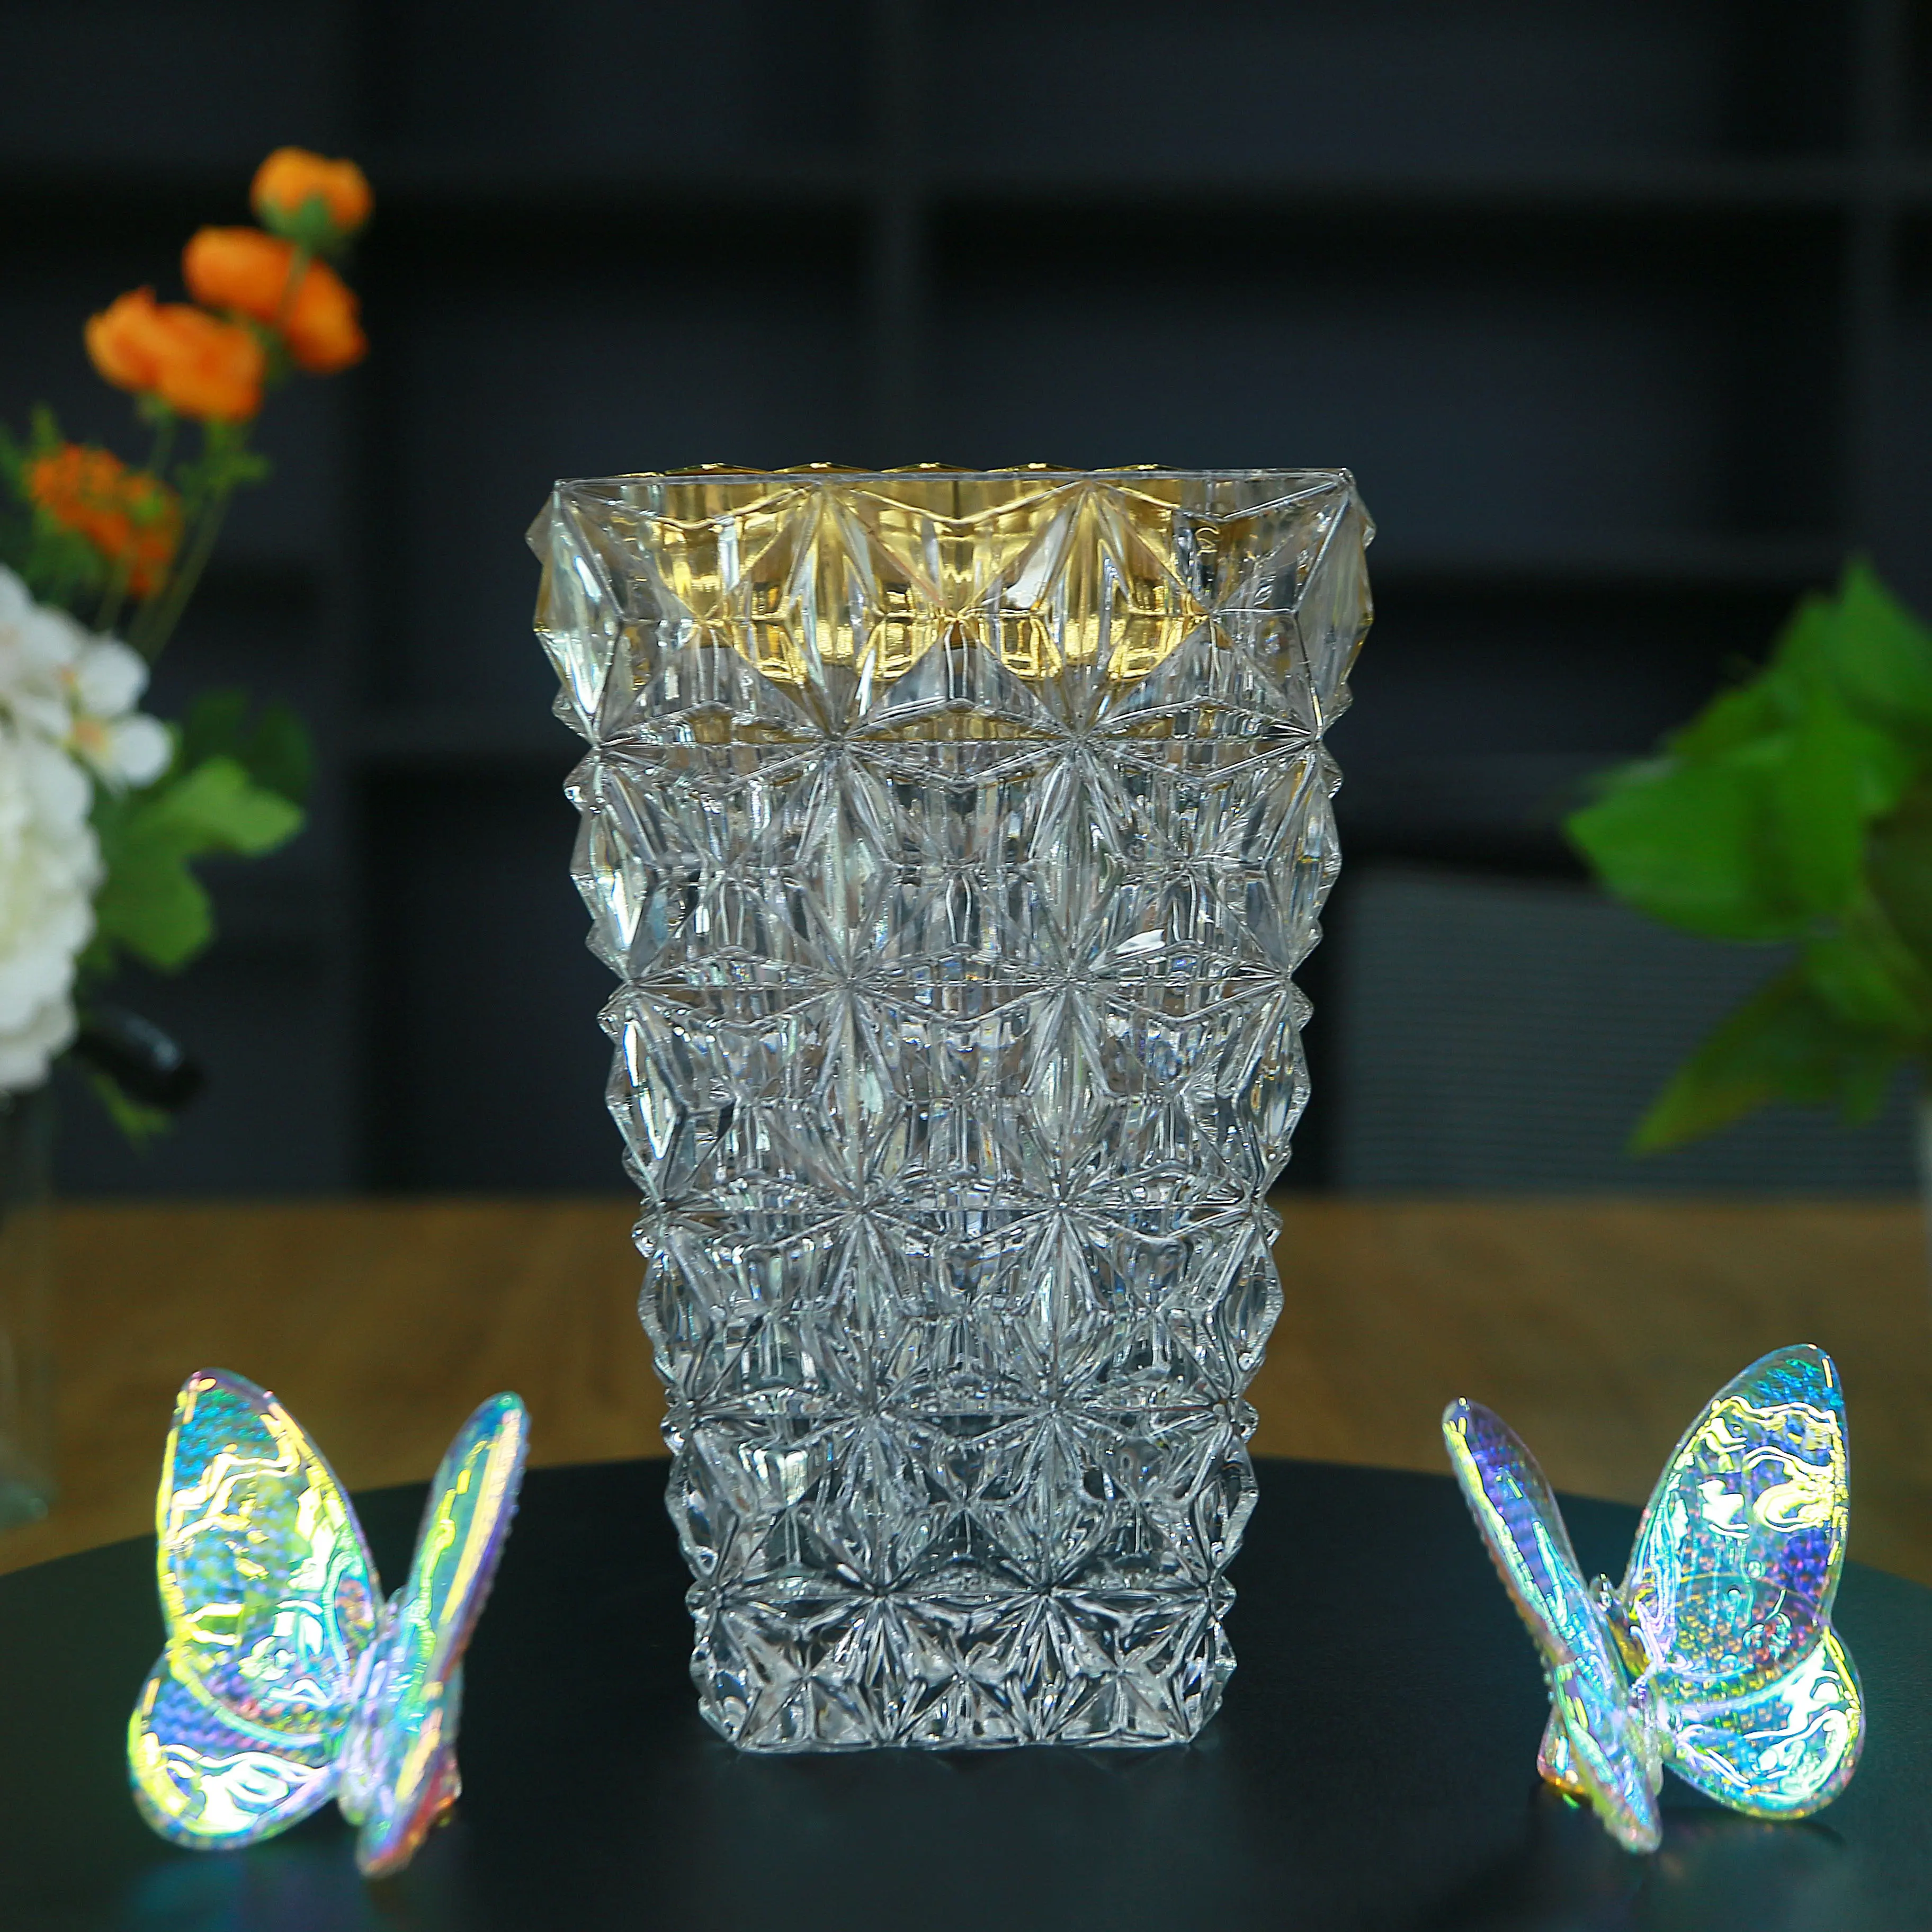 Luxury Style Middle Size Crystal Vase Bakhoor Incense Burner For Home Decor Wedding Party Ornament